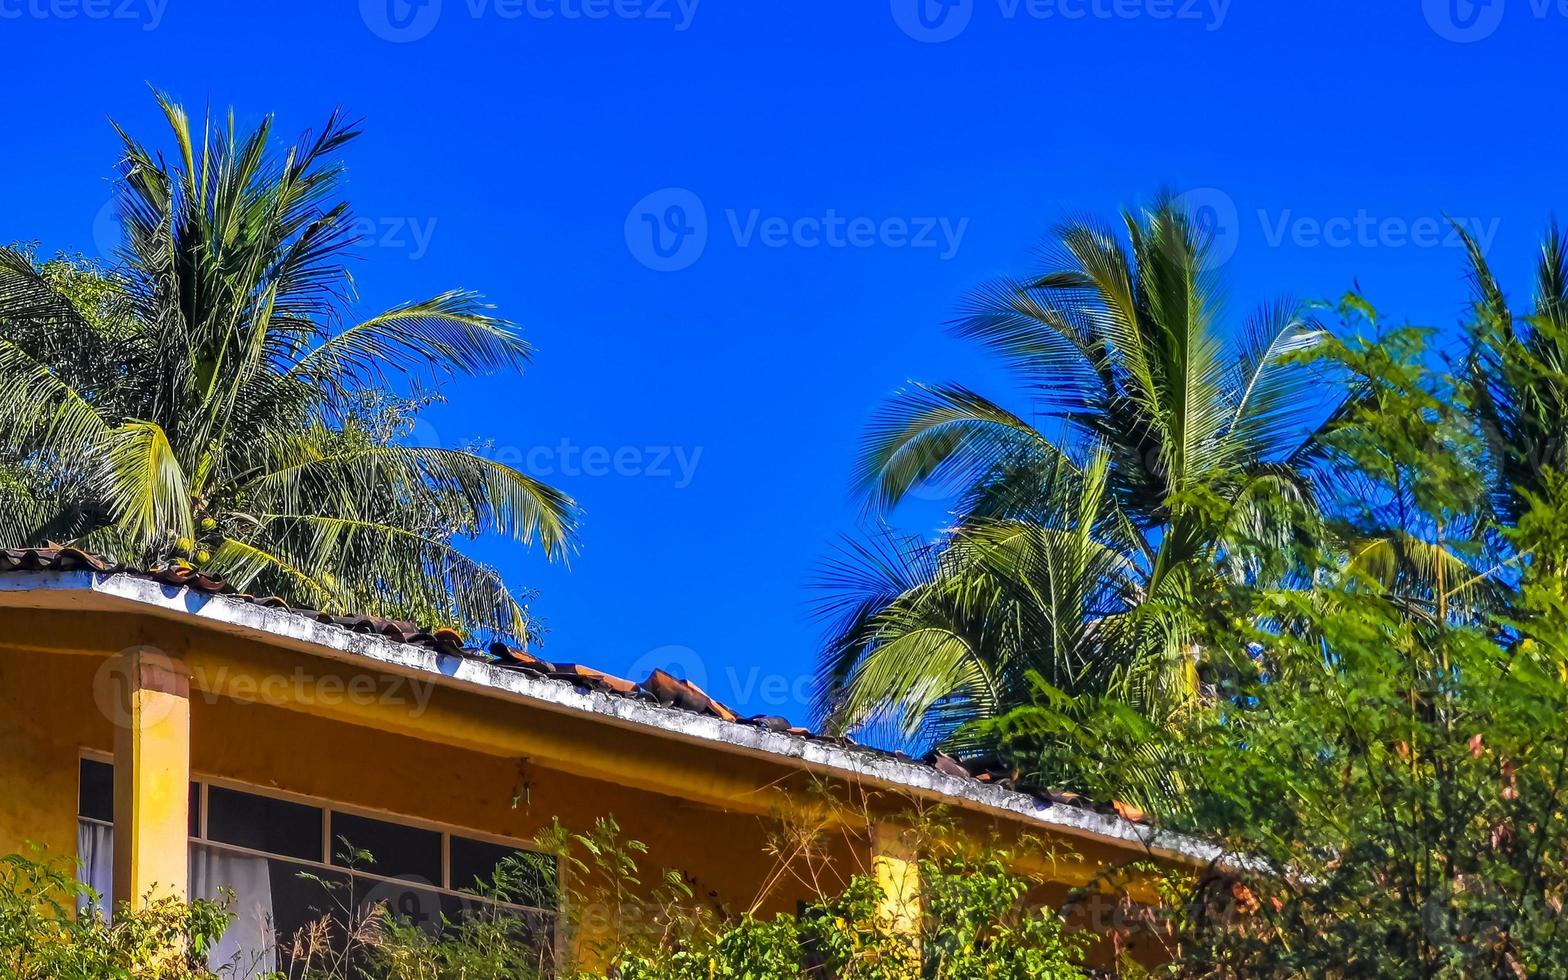 hotels resorts gebouwen in paradijs tussen palm bomen puerto escondido. foto